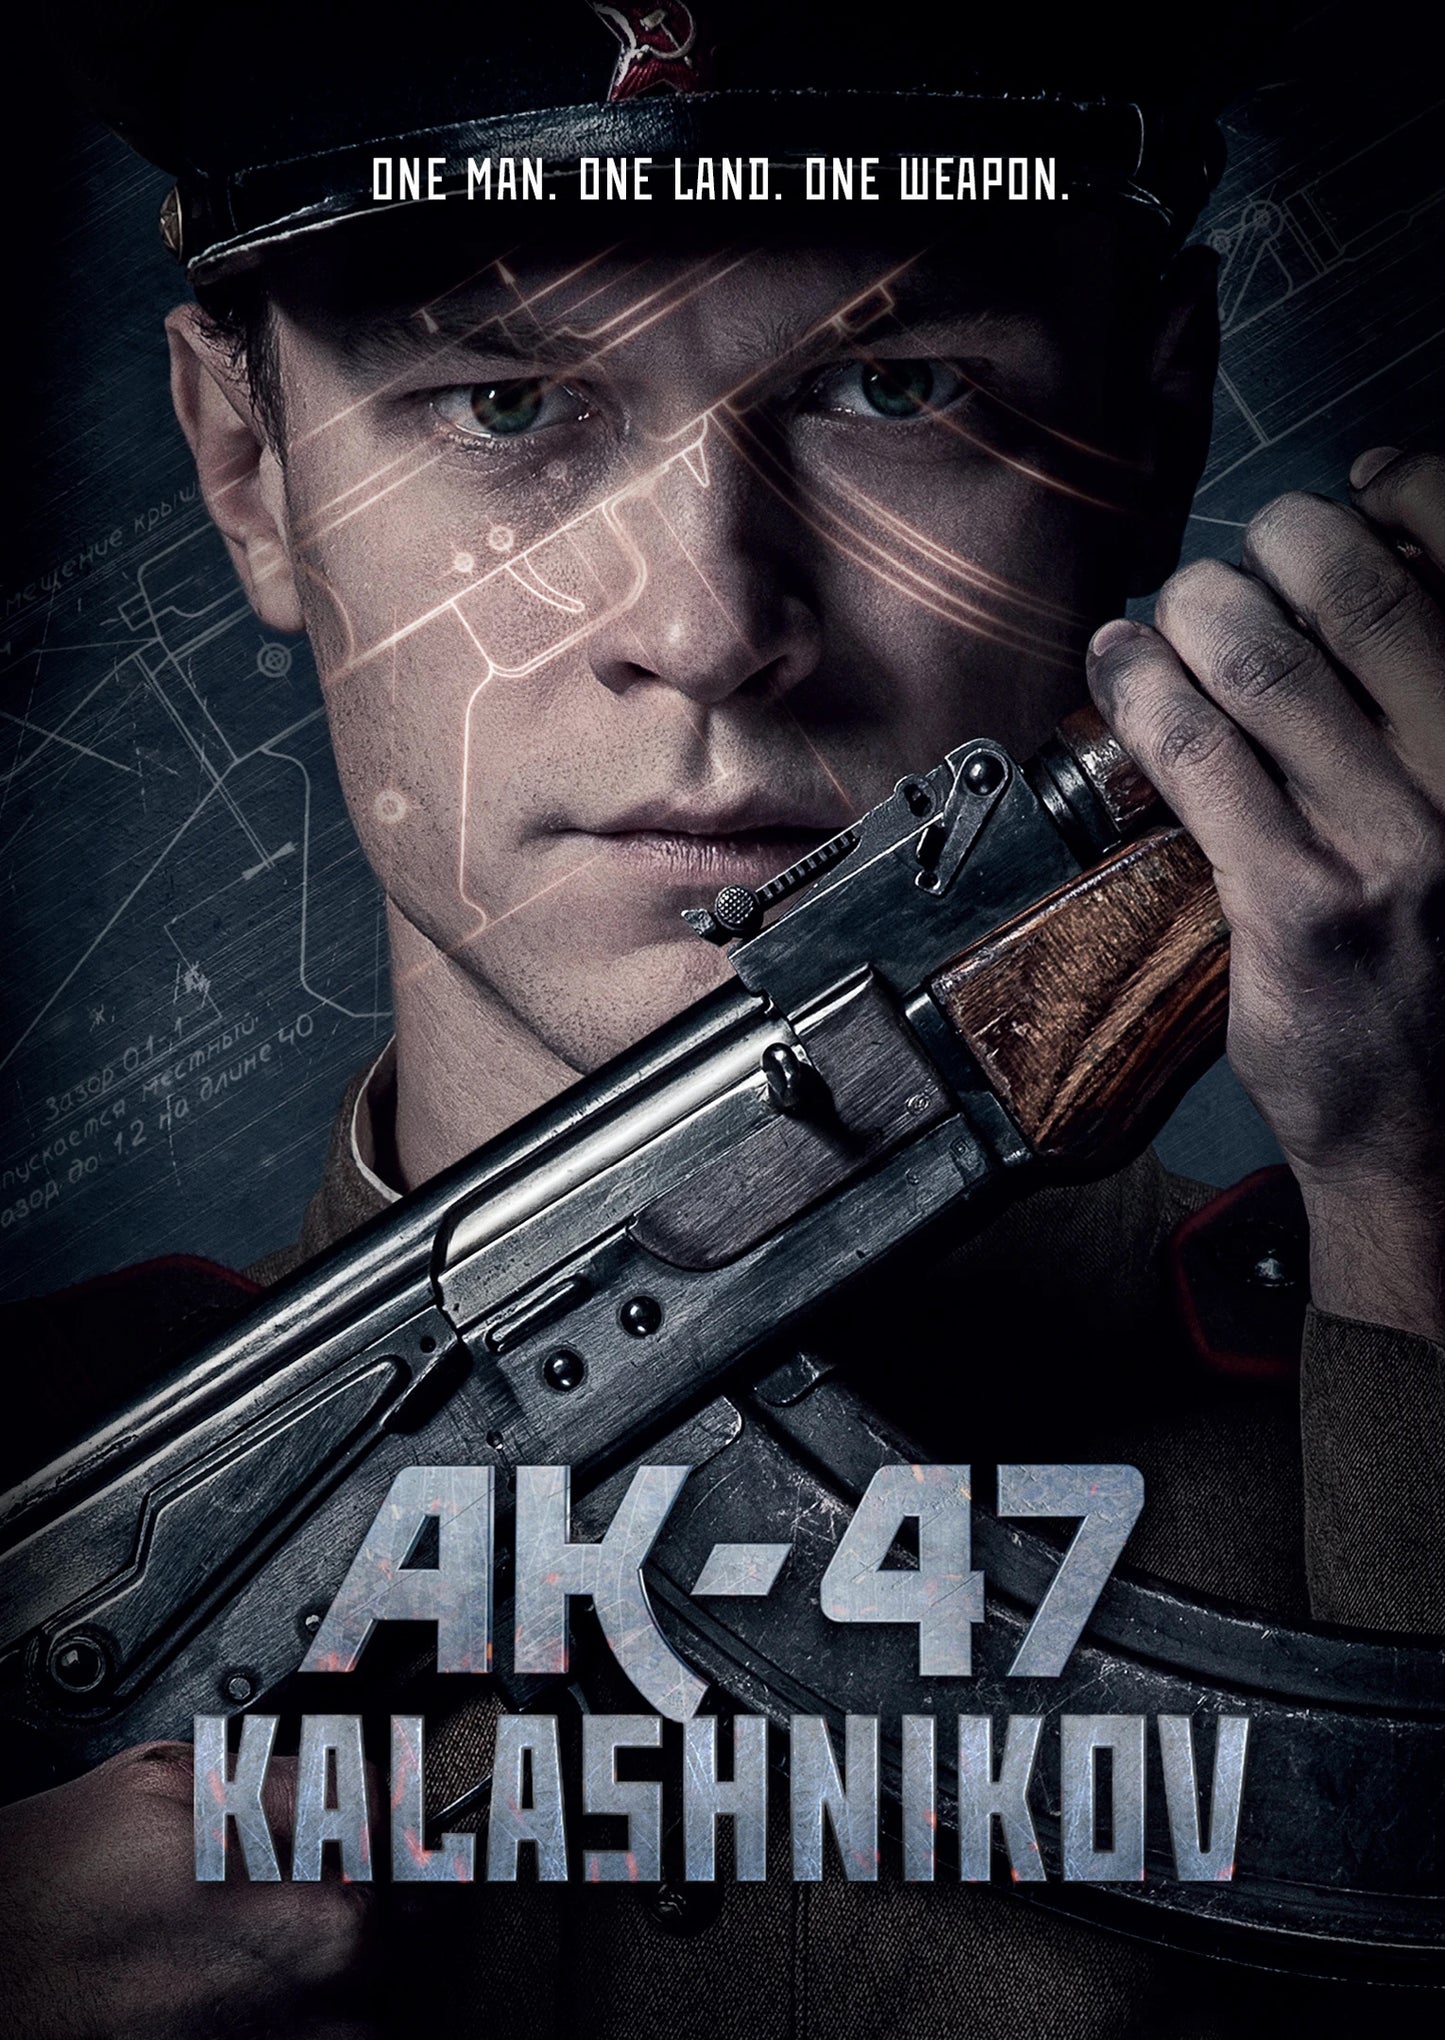 AK-47: Kalashnikov cover art